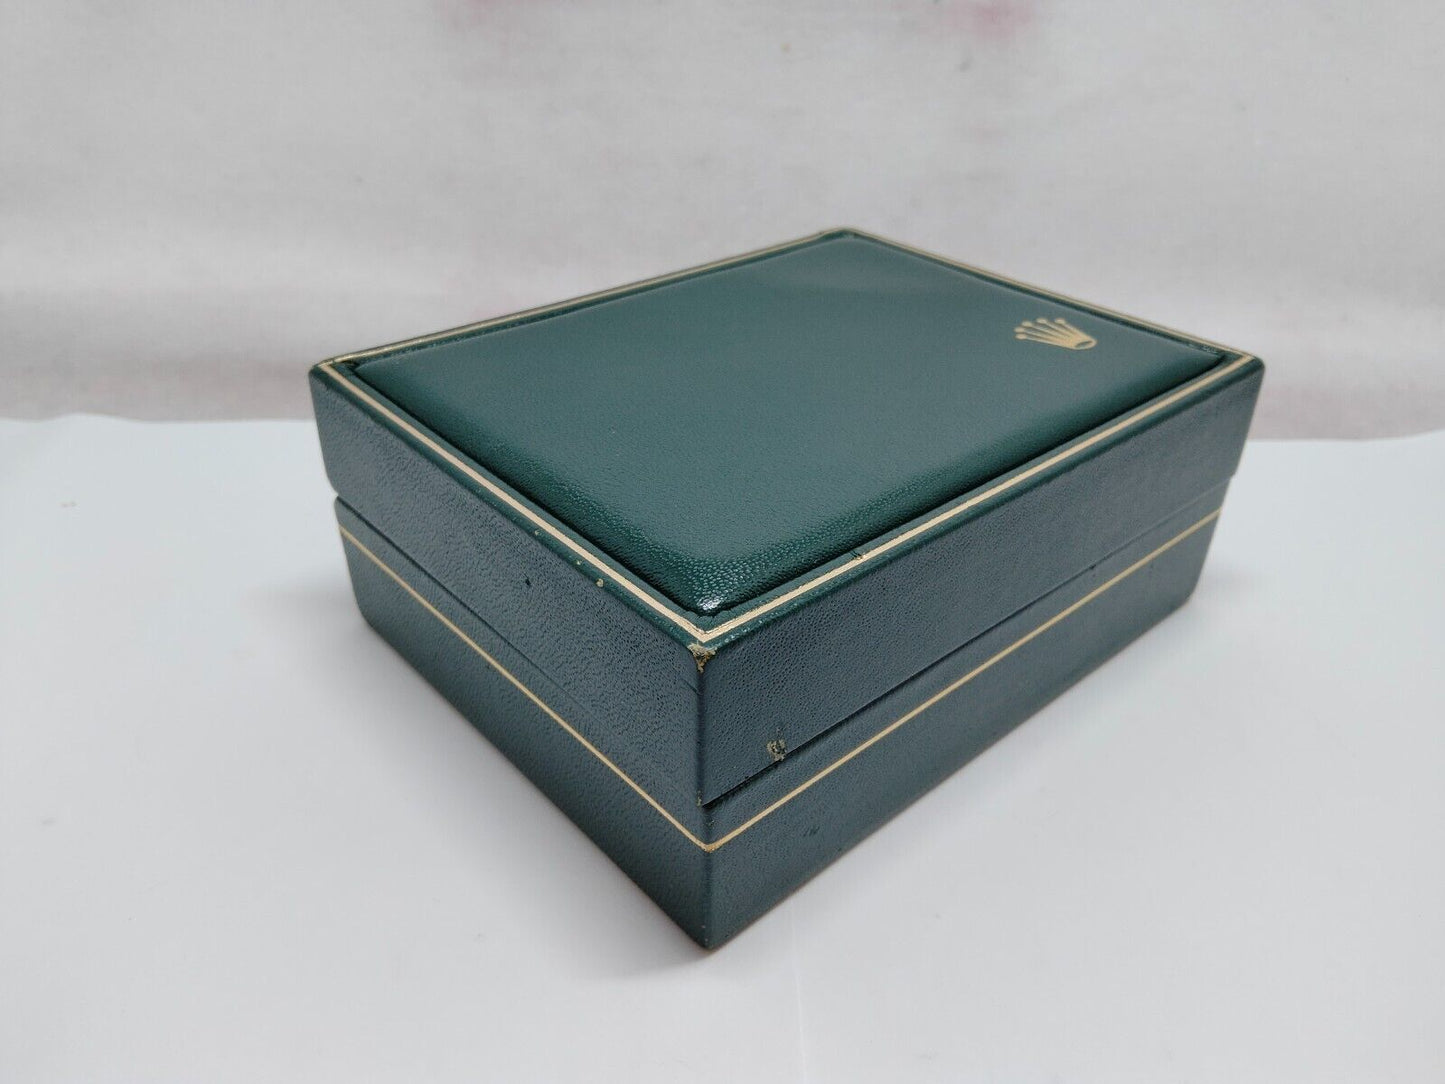 VINTAGE GENUINE ROLEX Green watch box case 11.00.71 wood leather 230625003yS